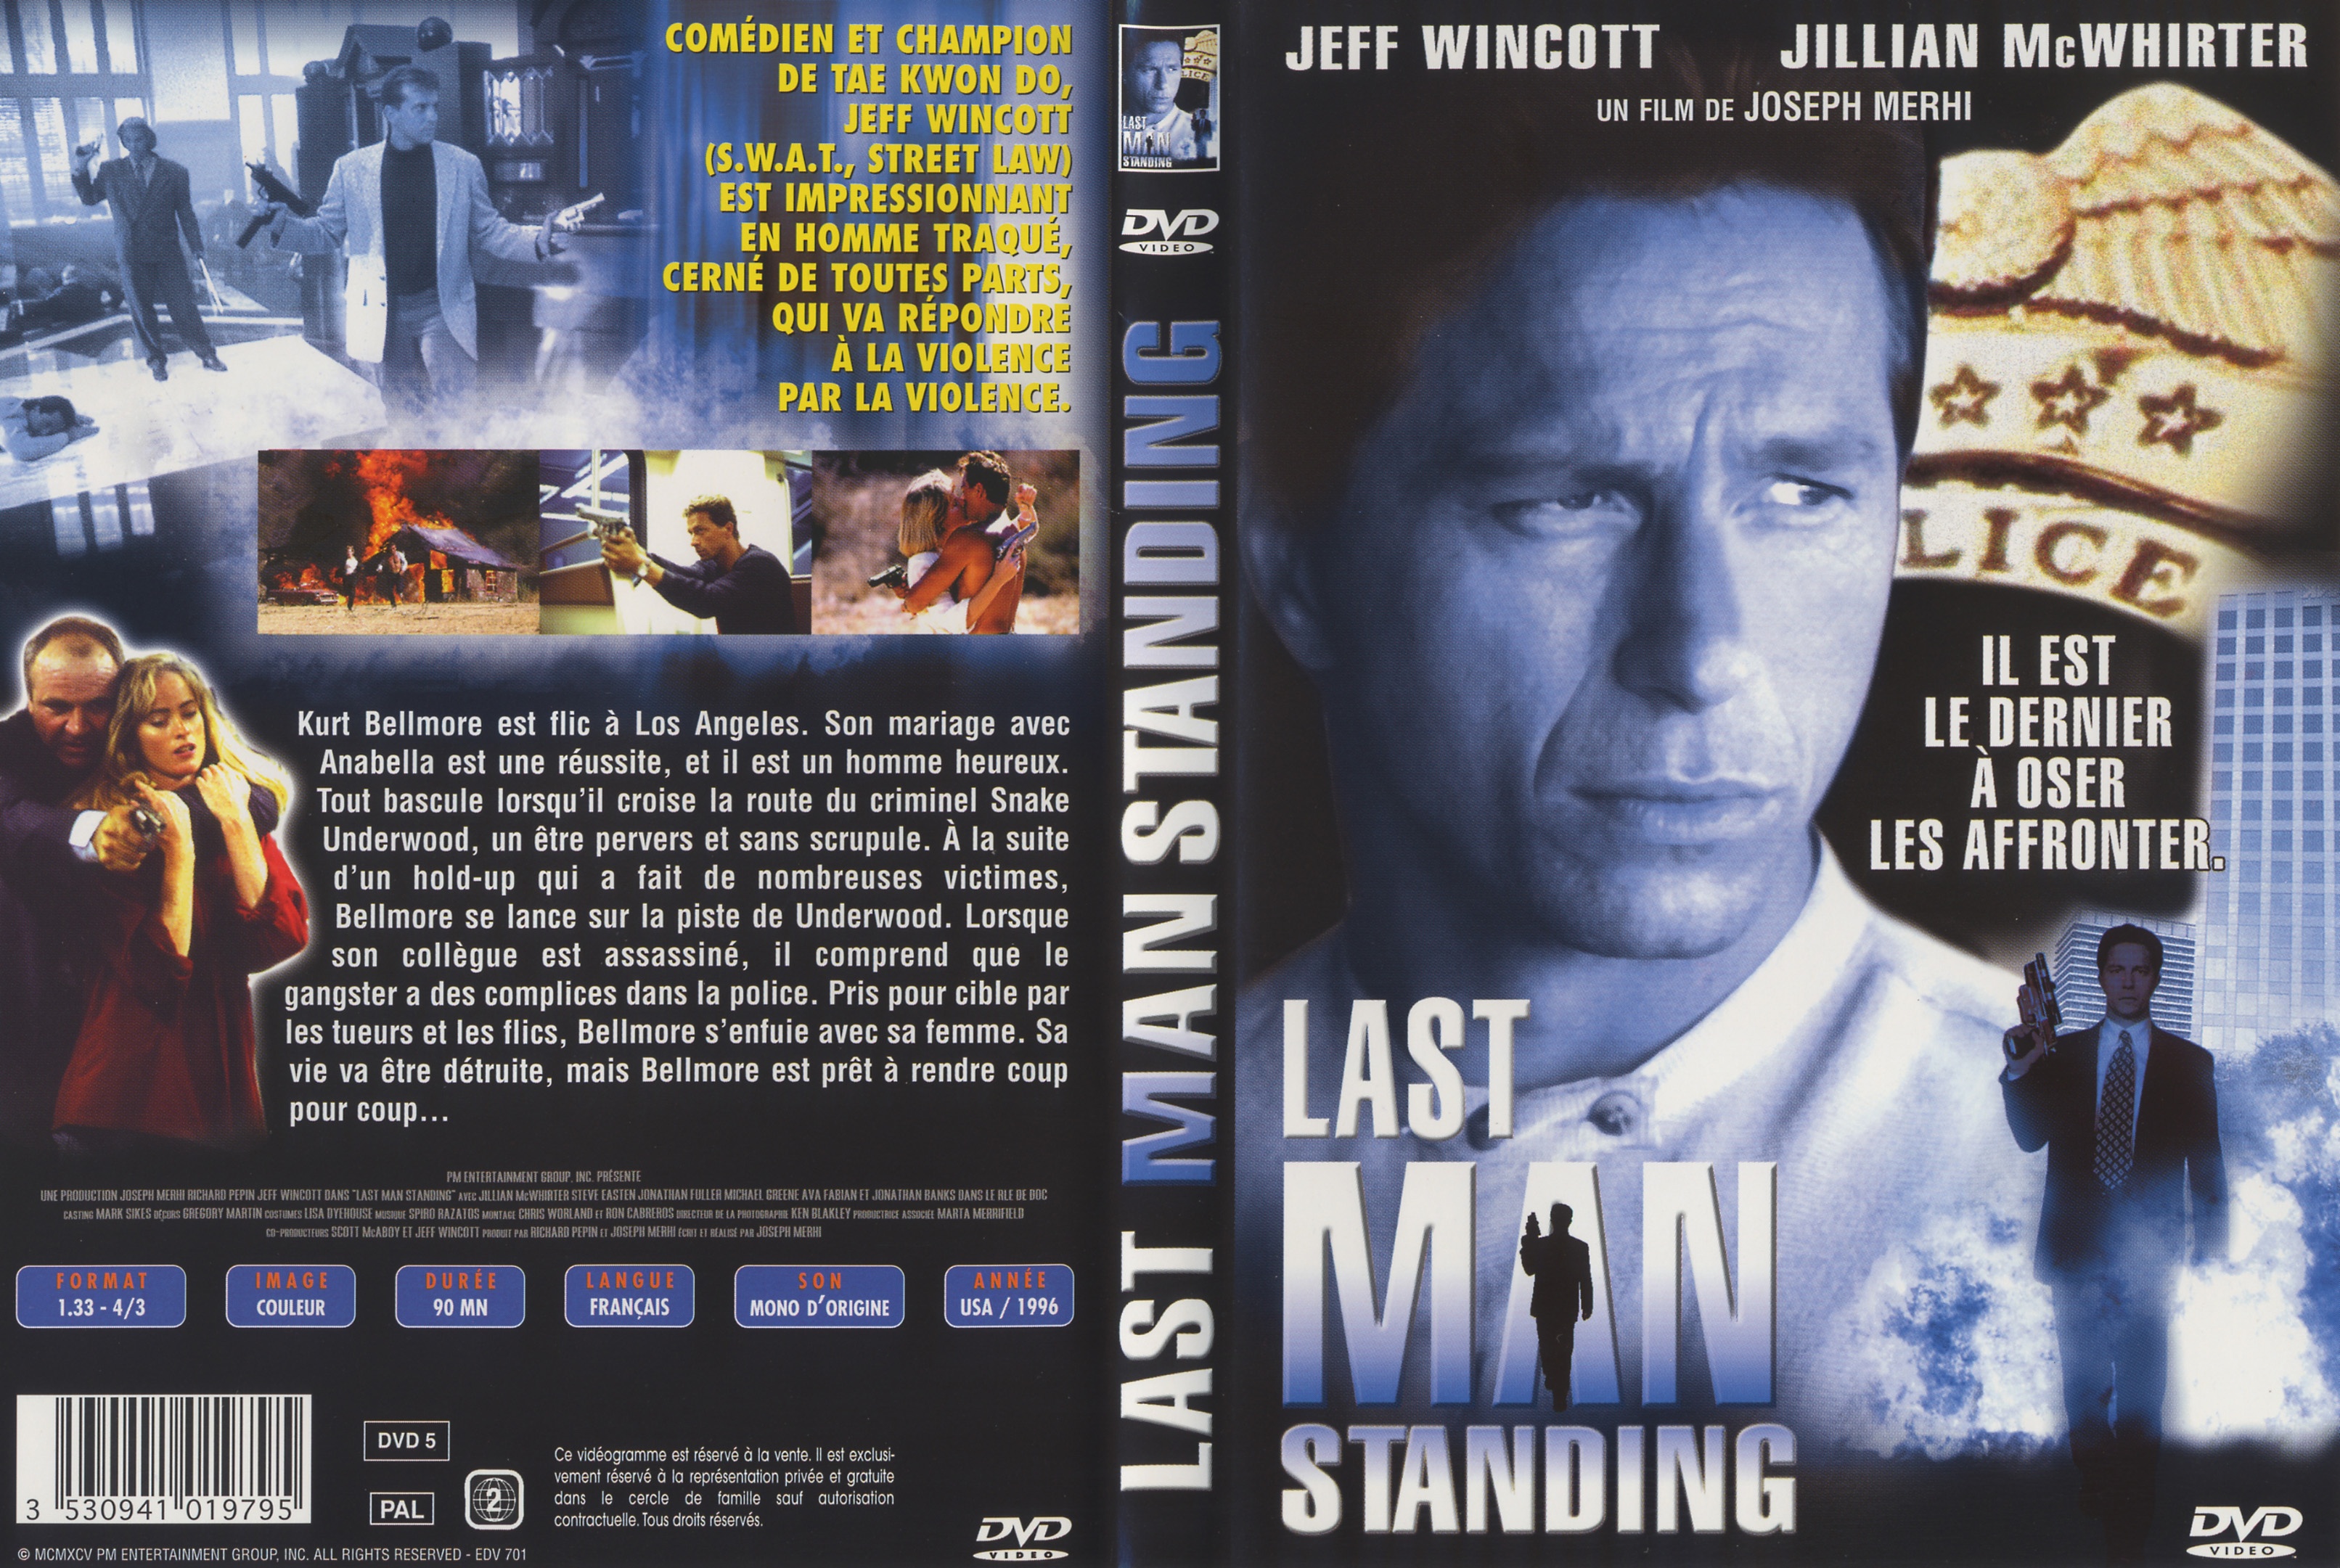 Jaquette DVD Last man standing